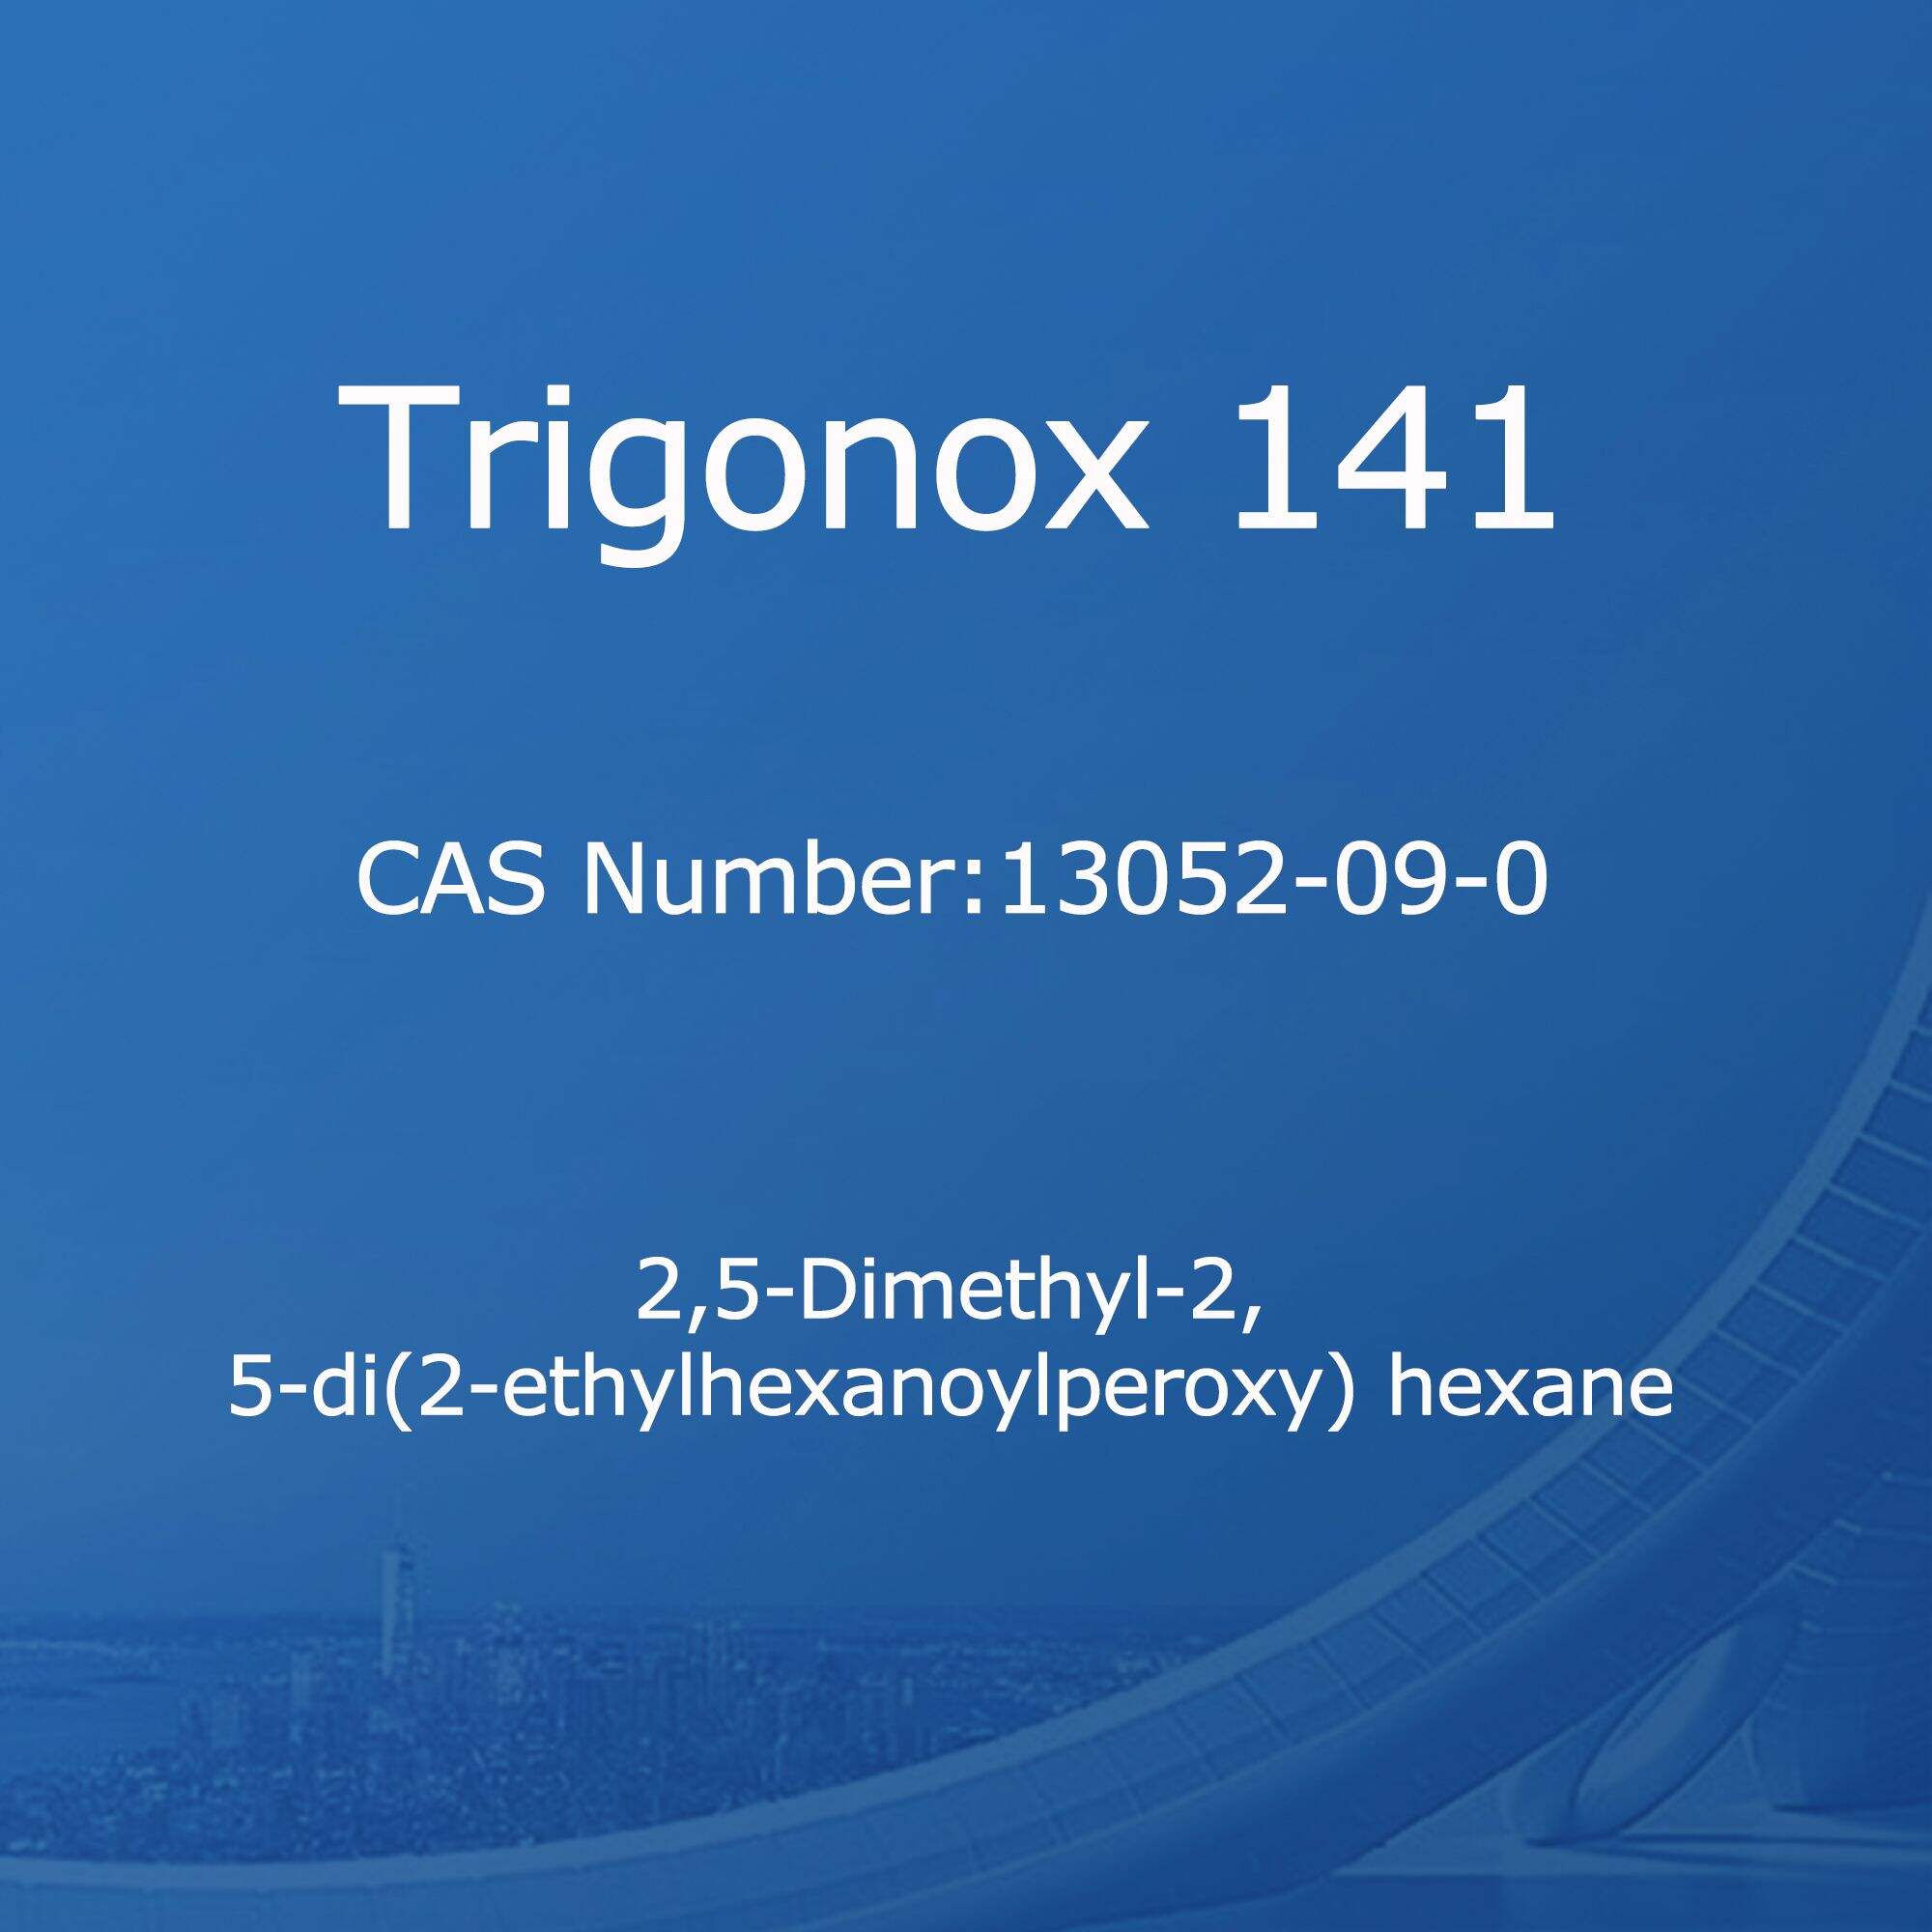 Trigonox 141,2,5-dimethyl-2,5-di(2-ethylhexanoylperoxy)hexan